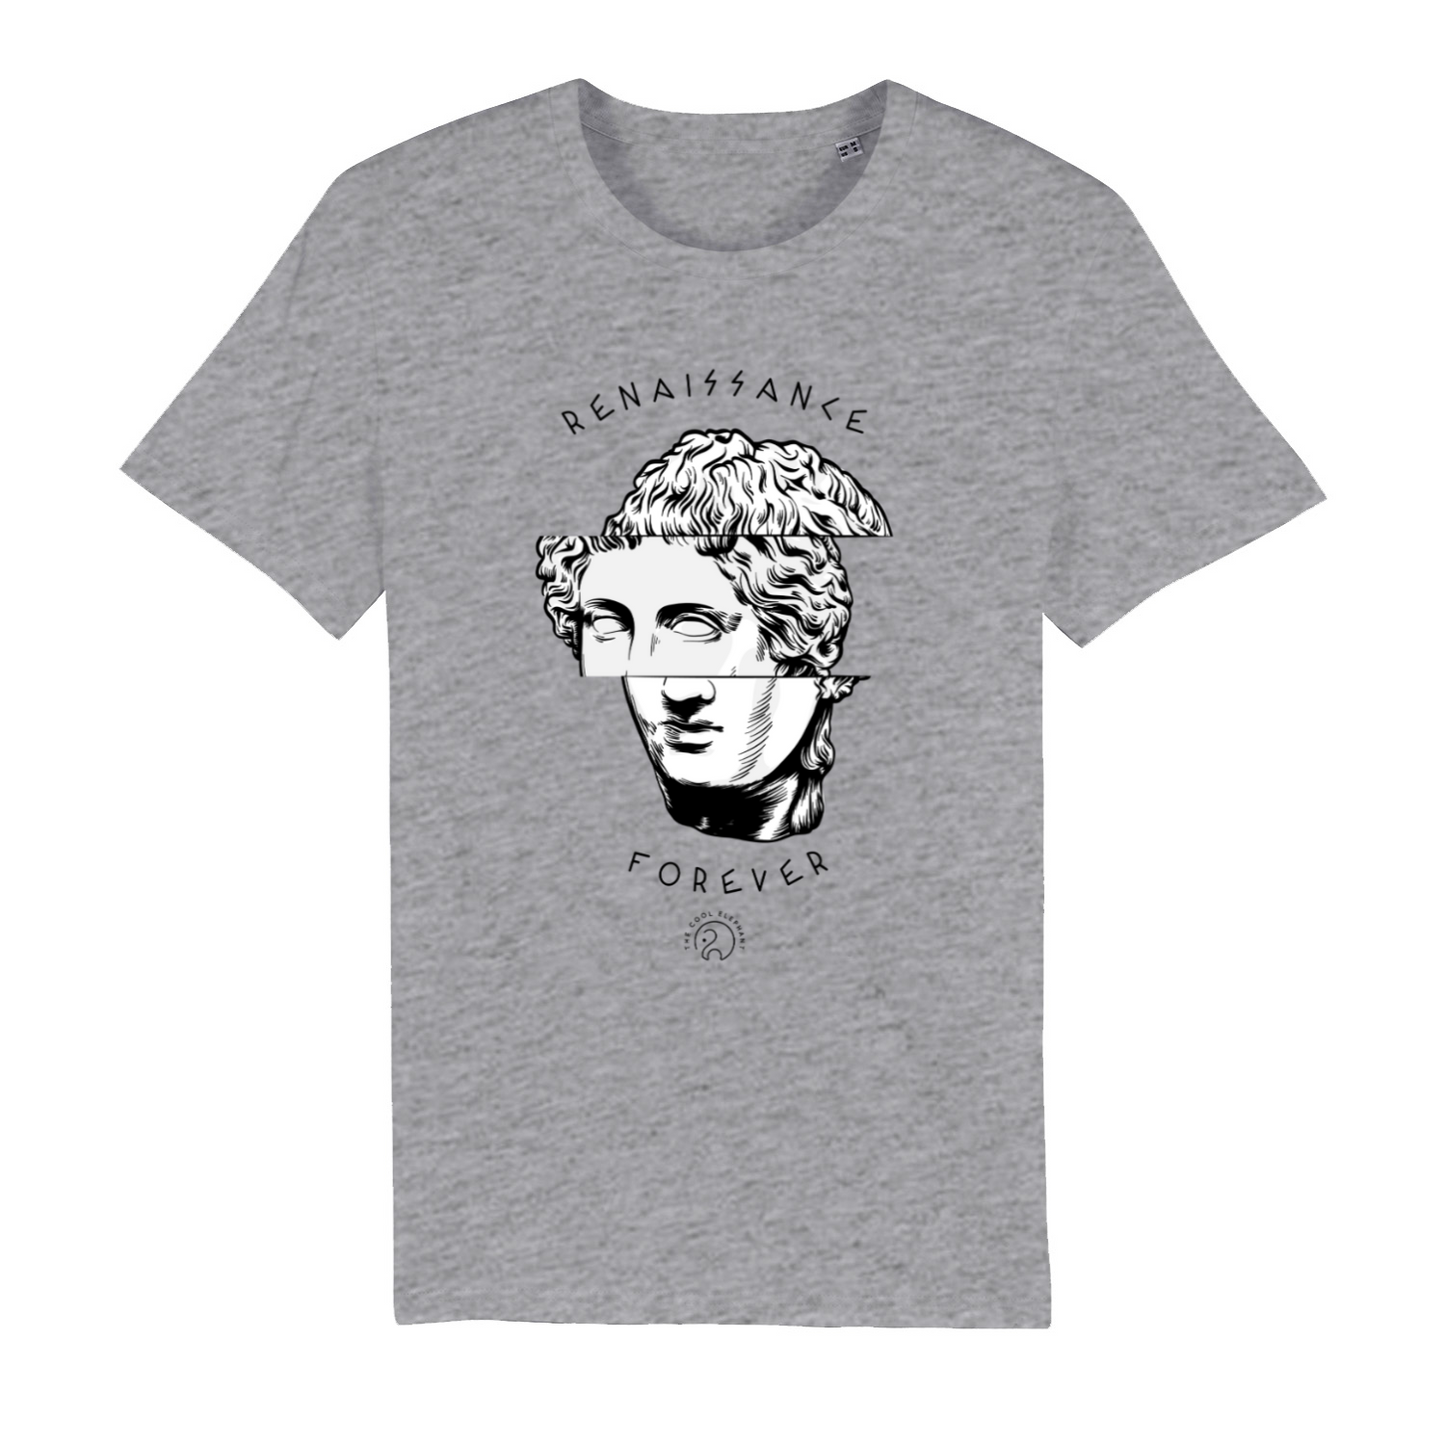 T-Shirt "Renaissance Forever"